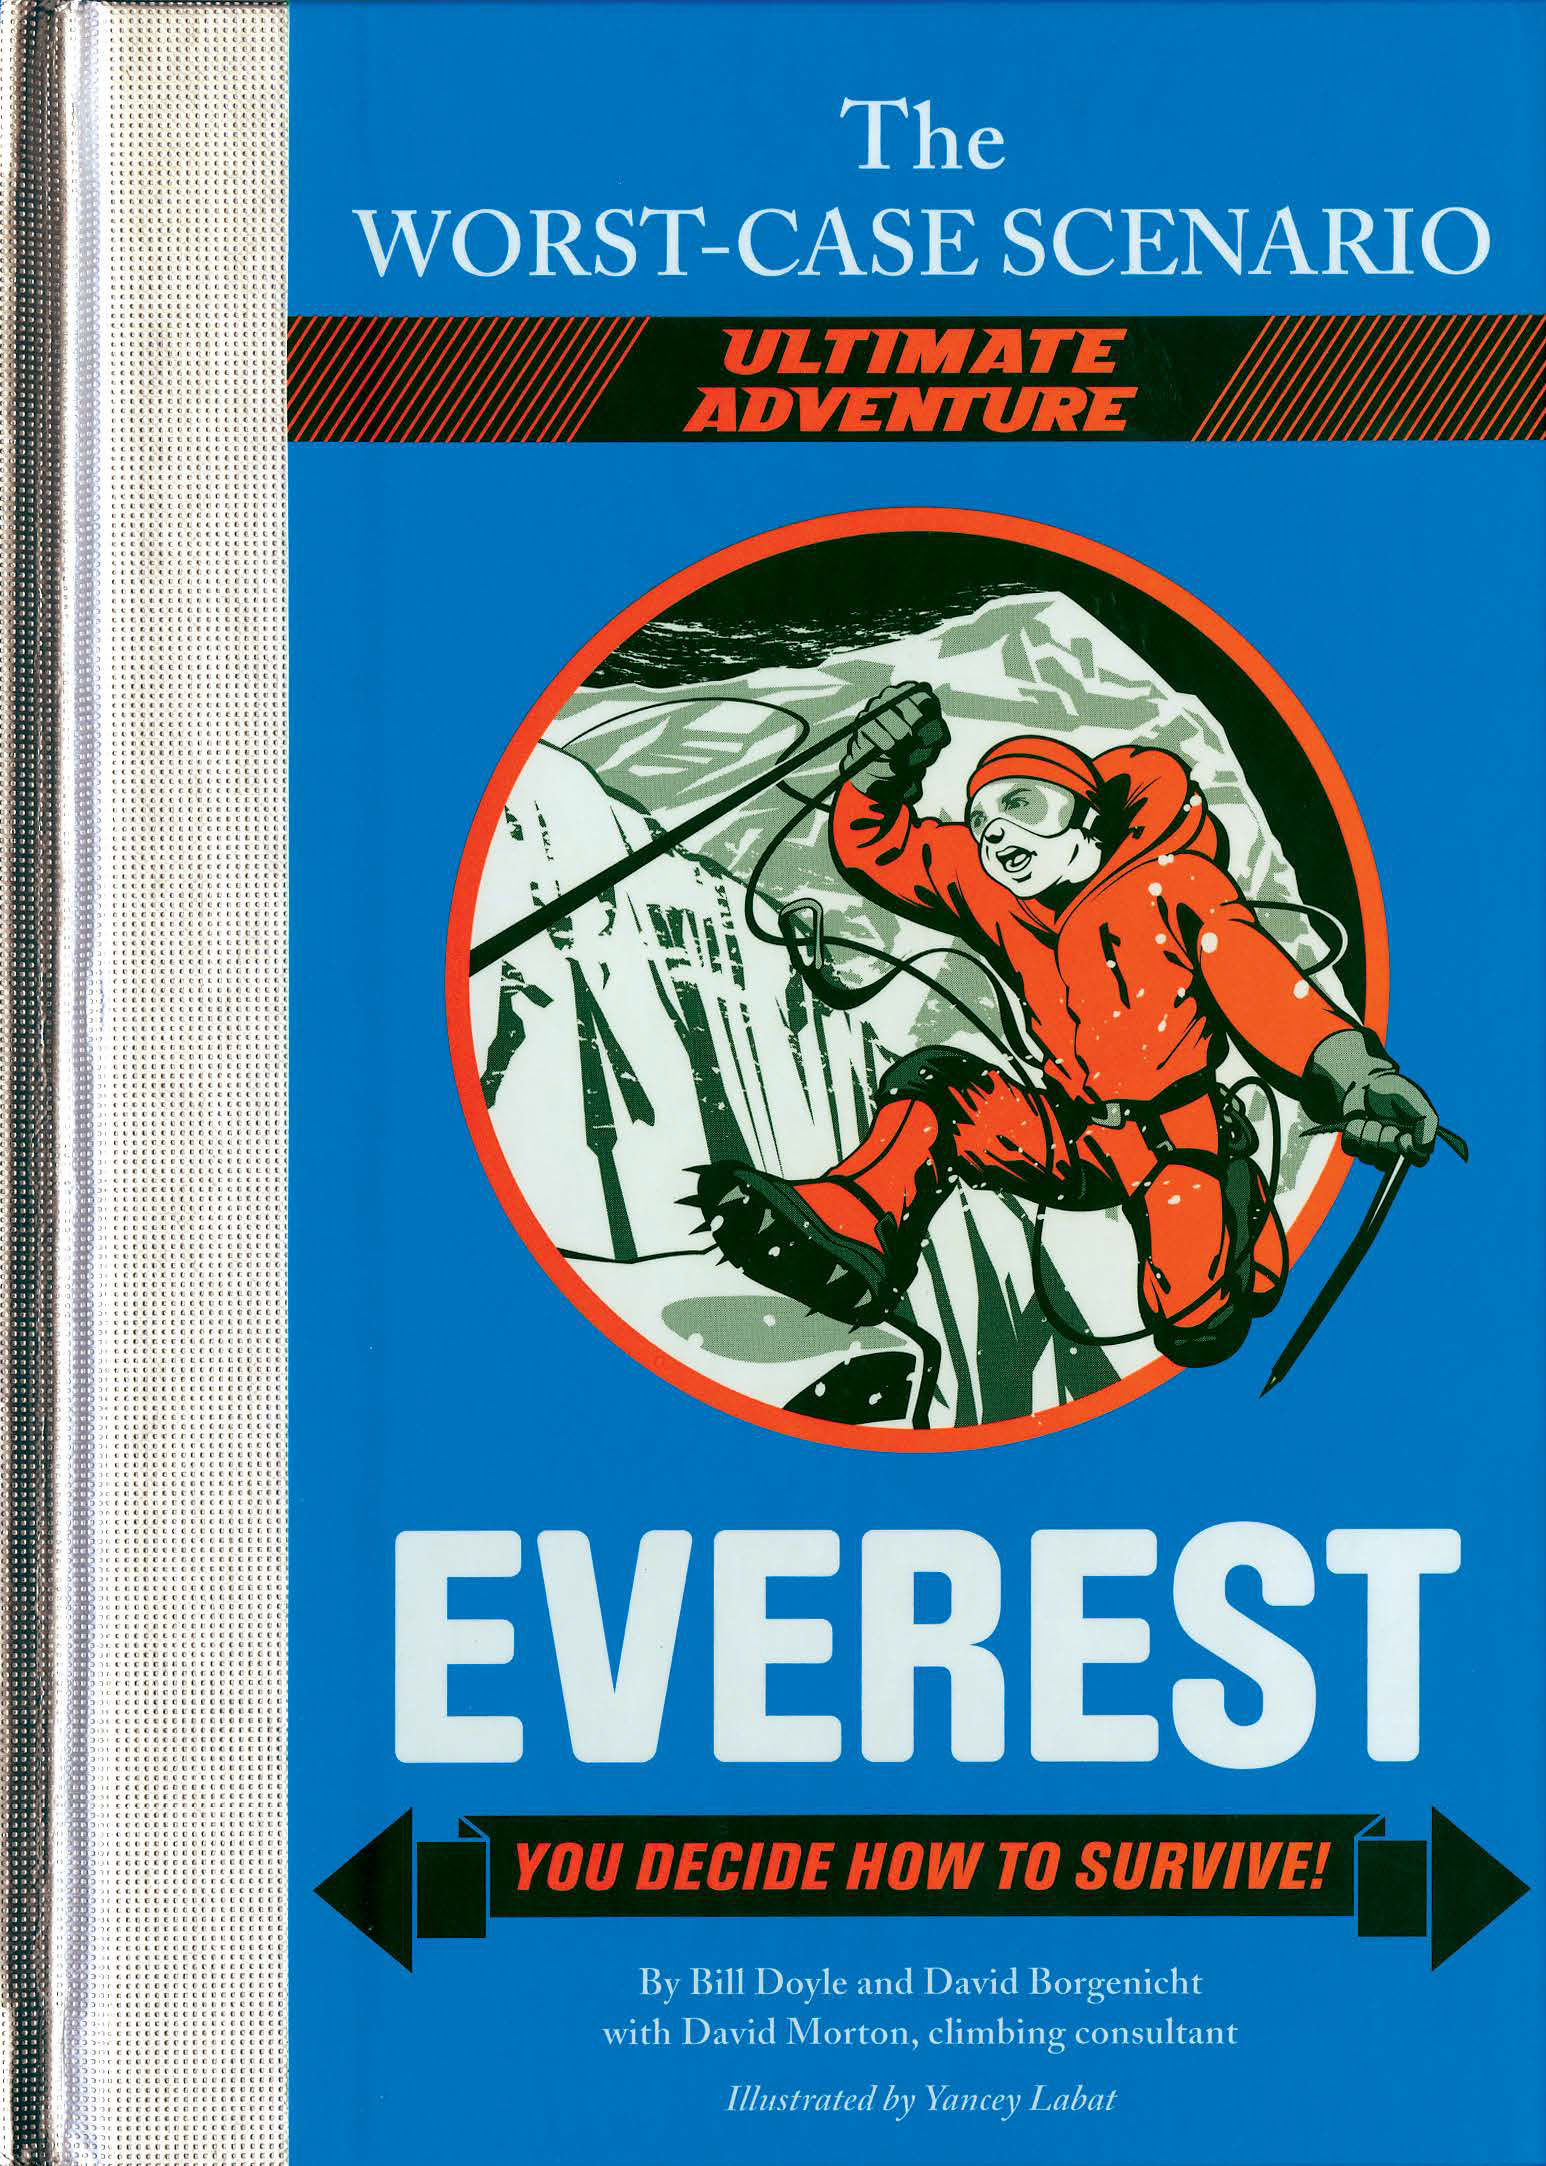 WCS Everest-1.jpg